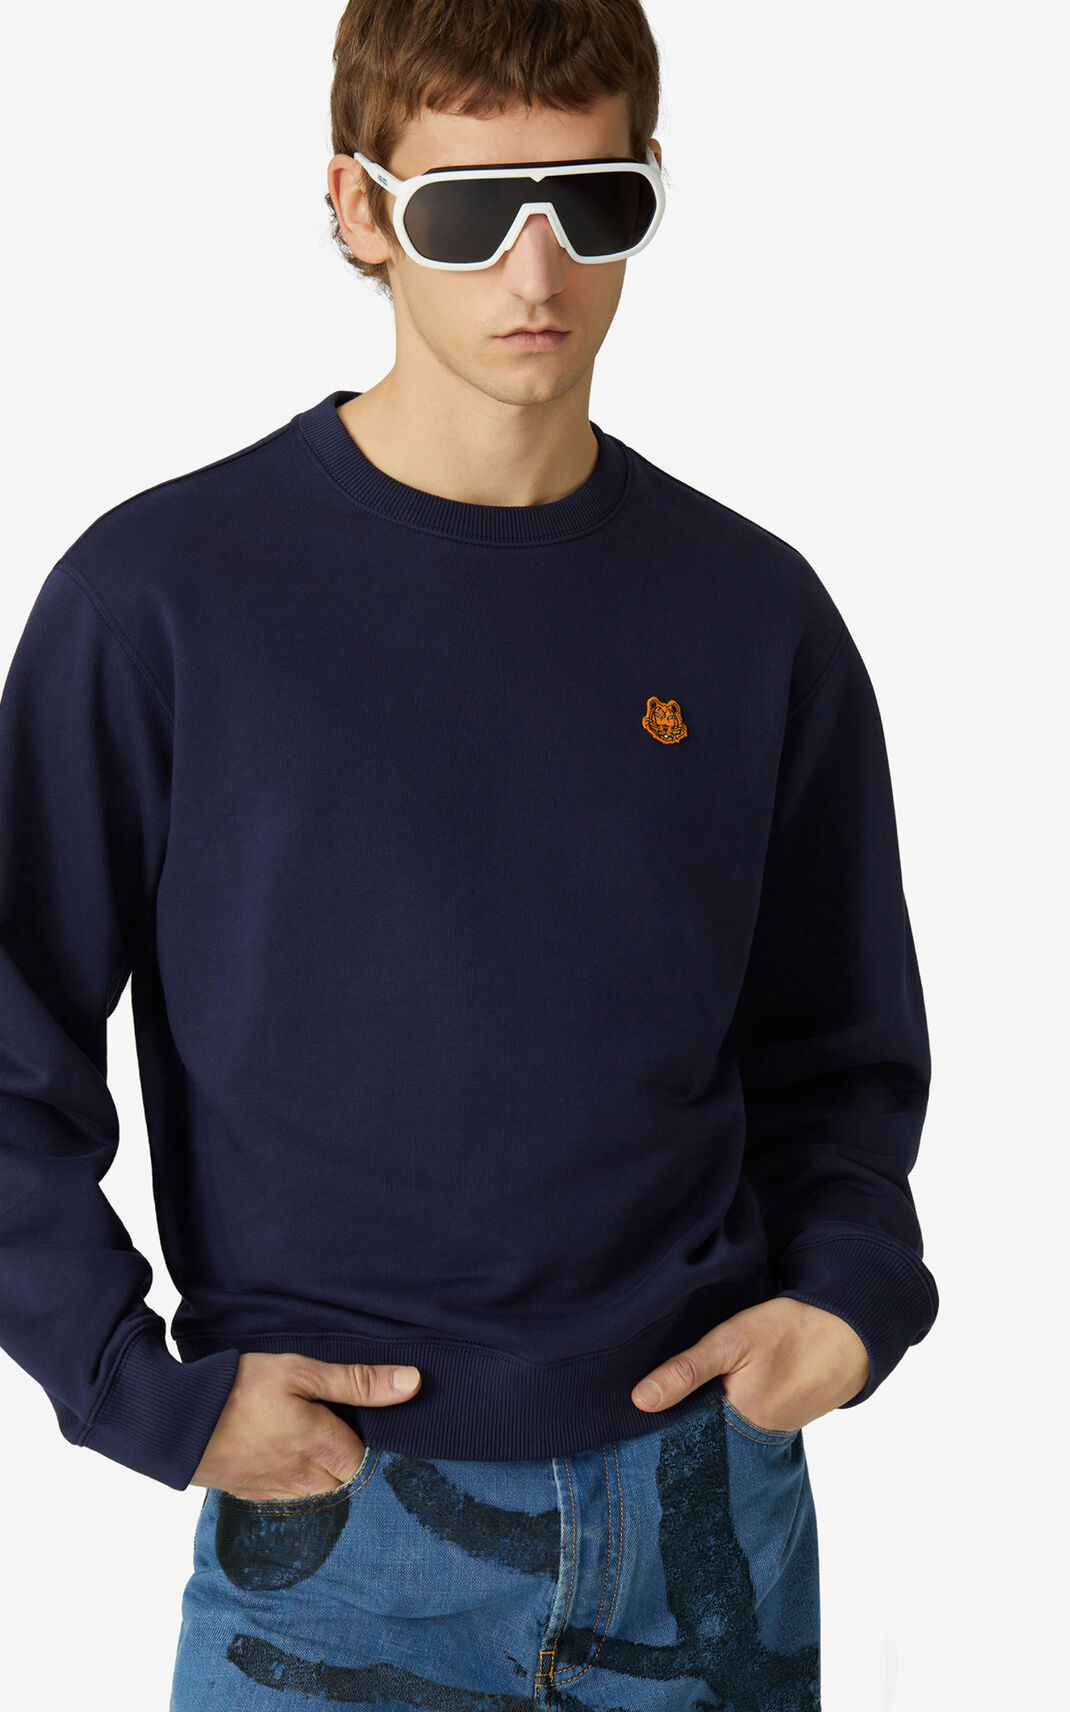 Kenzo Tiger Crest Sweatshirt Navy Blue For Mens 8921ICBXM